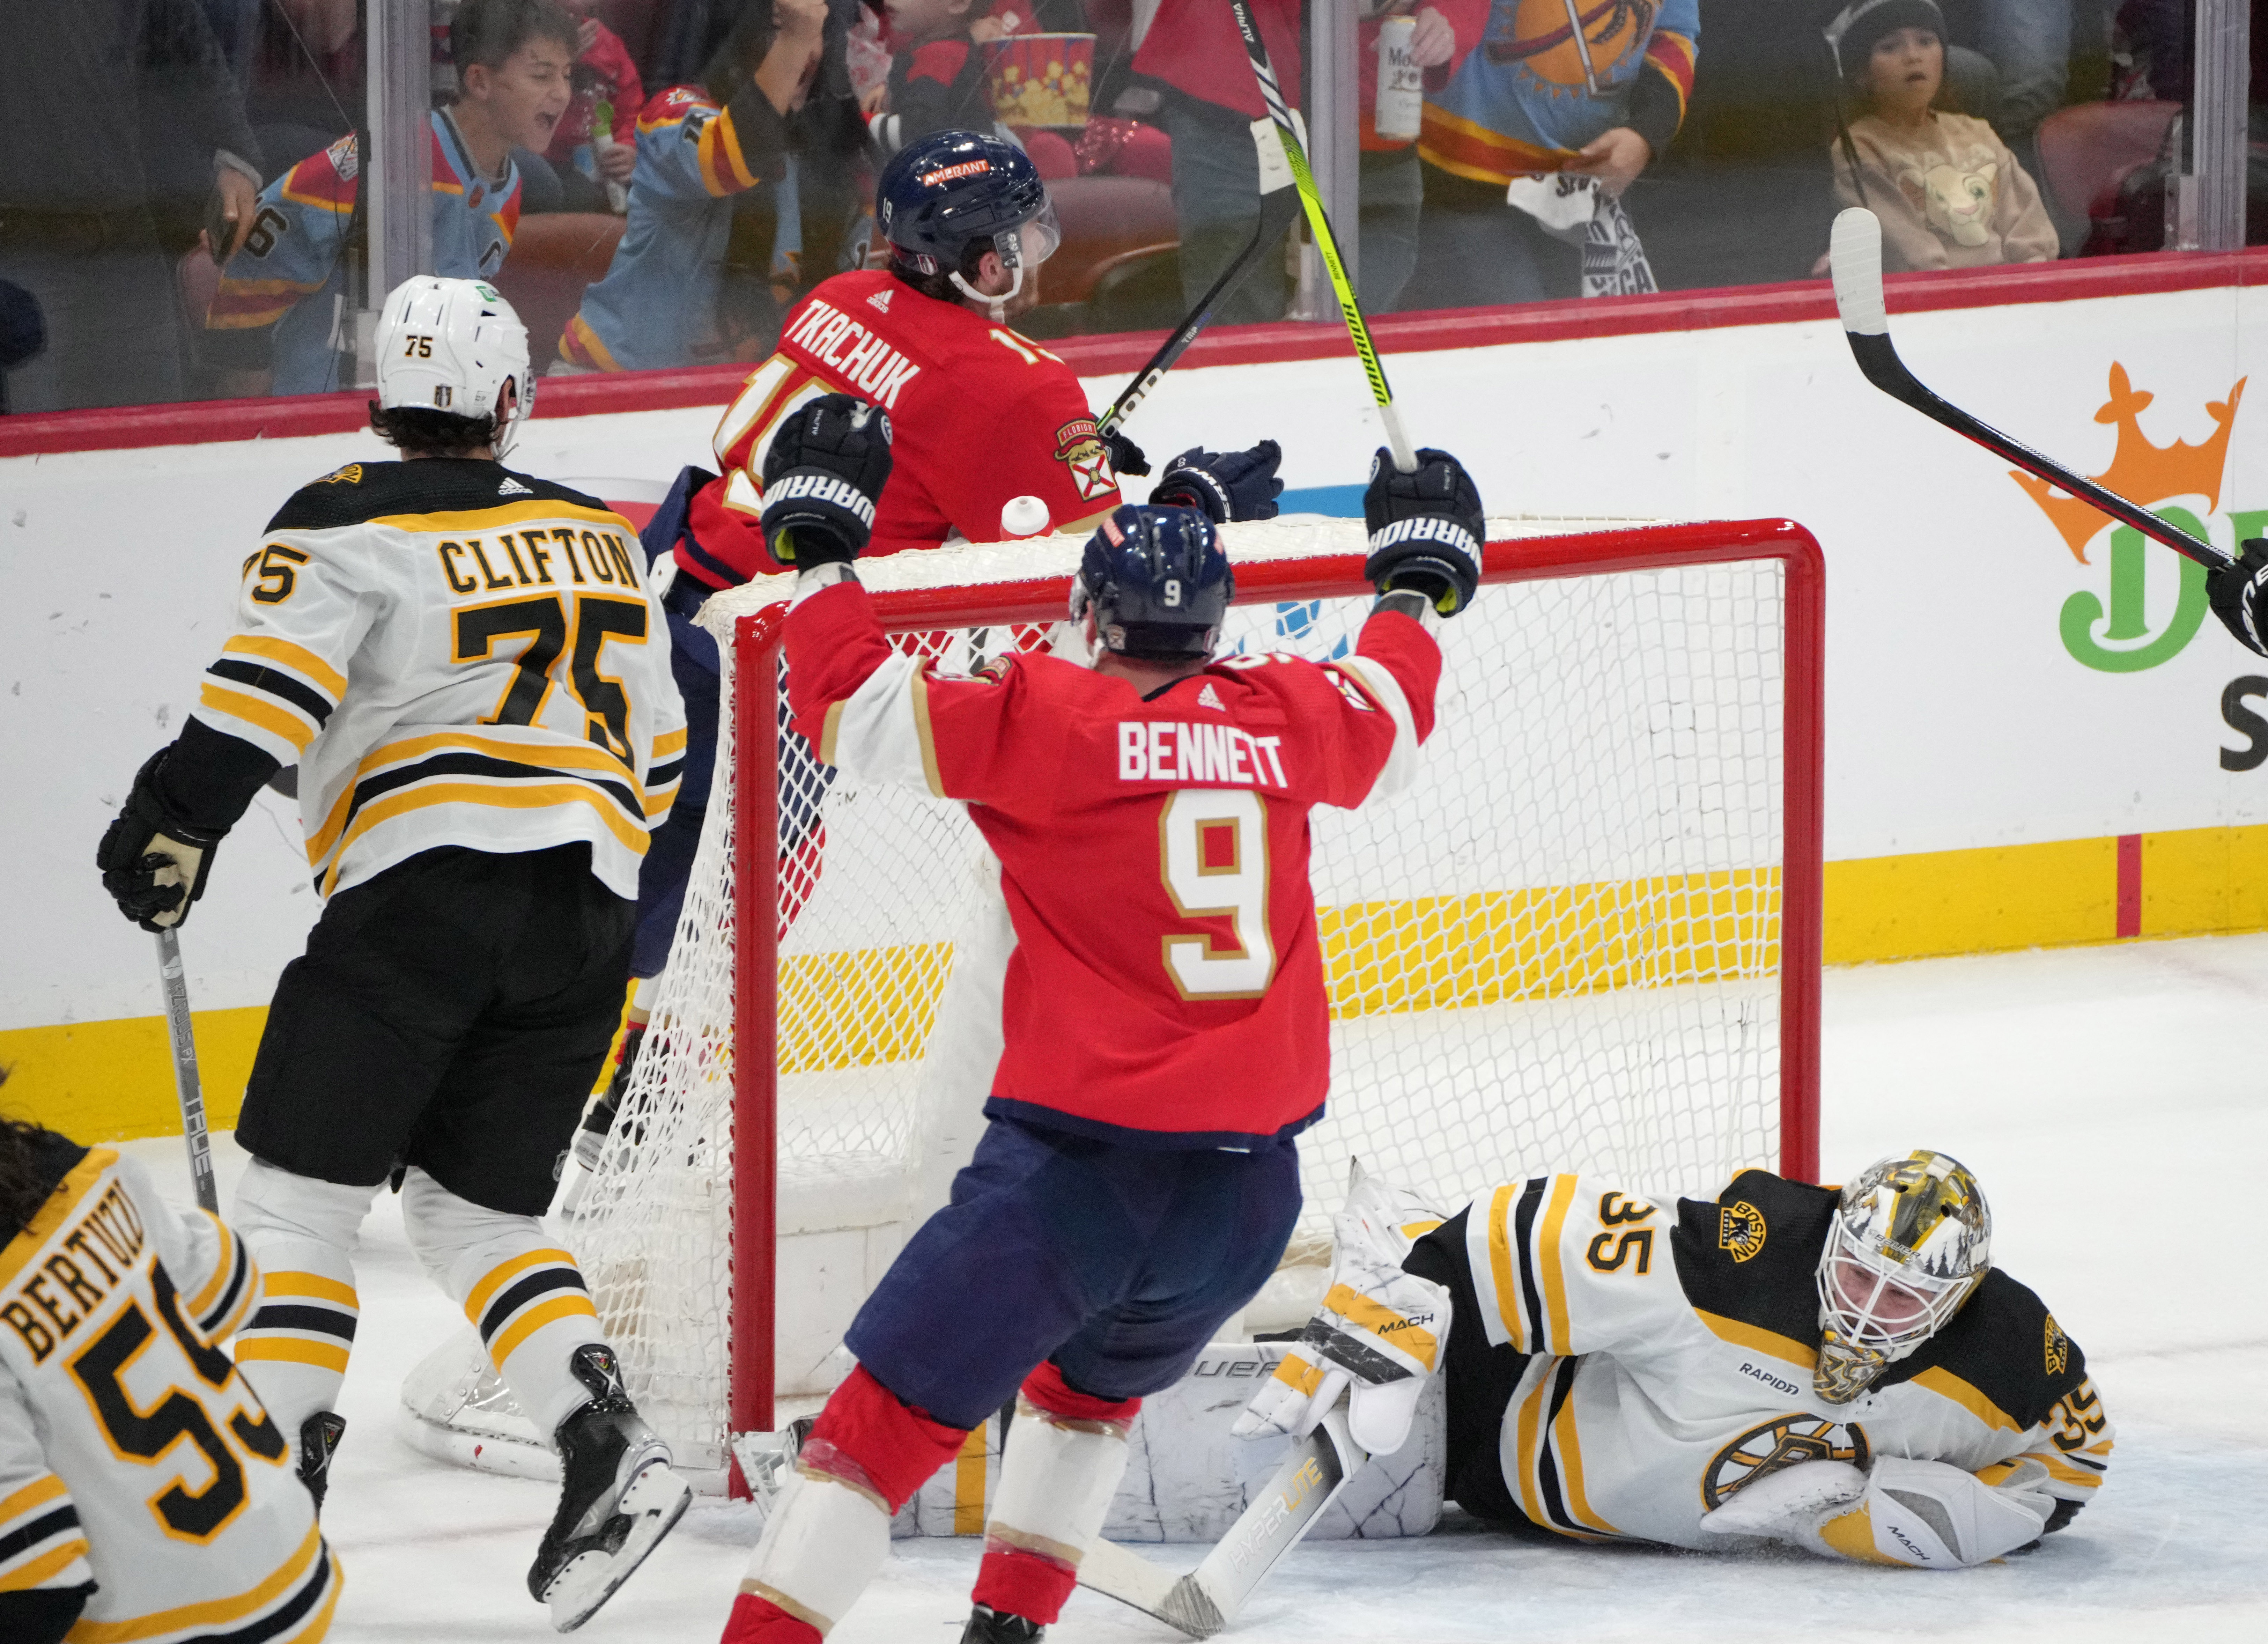 Tyler Bertuzzi Boston Bruins NHL Fanatics Breakaway Home Jersey